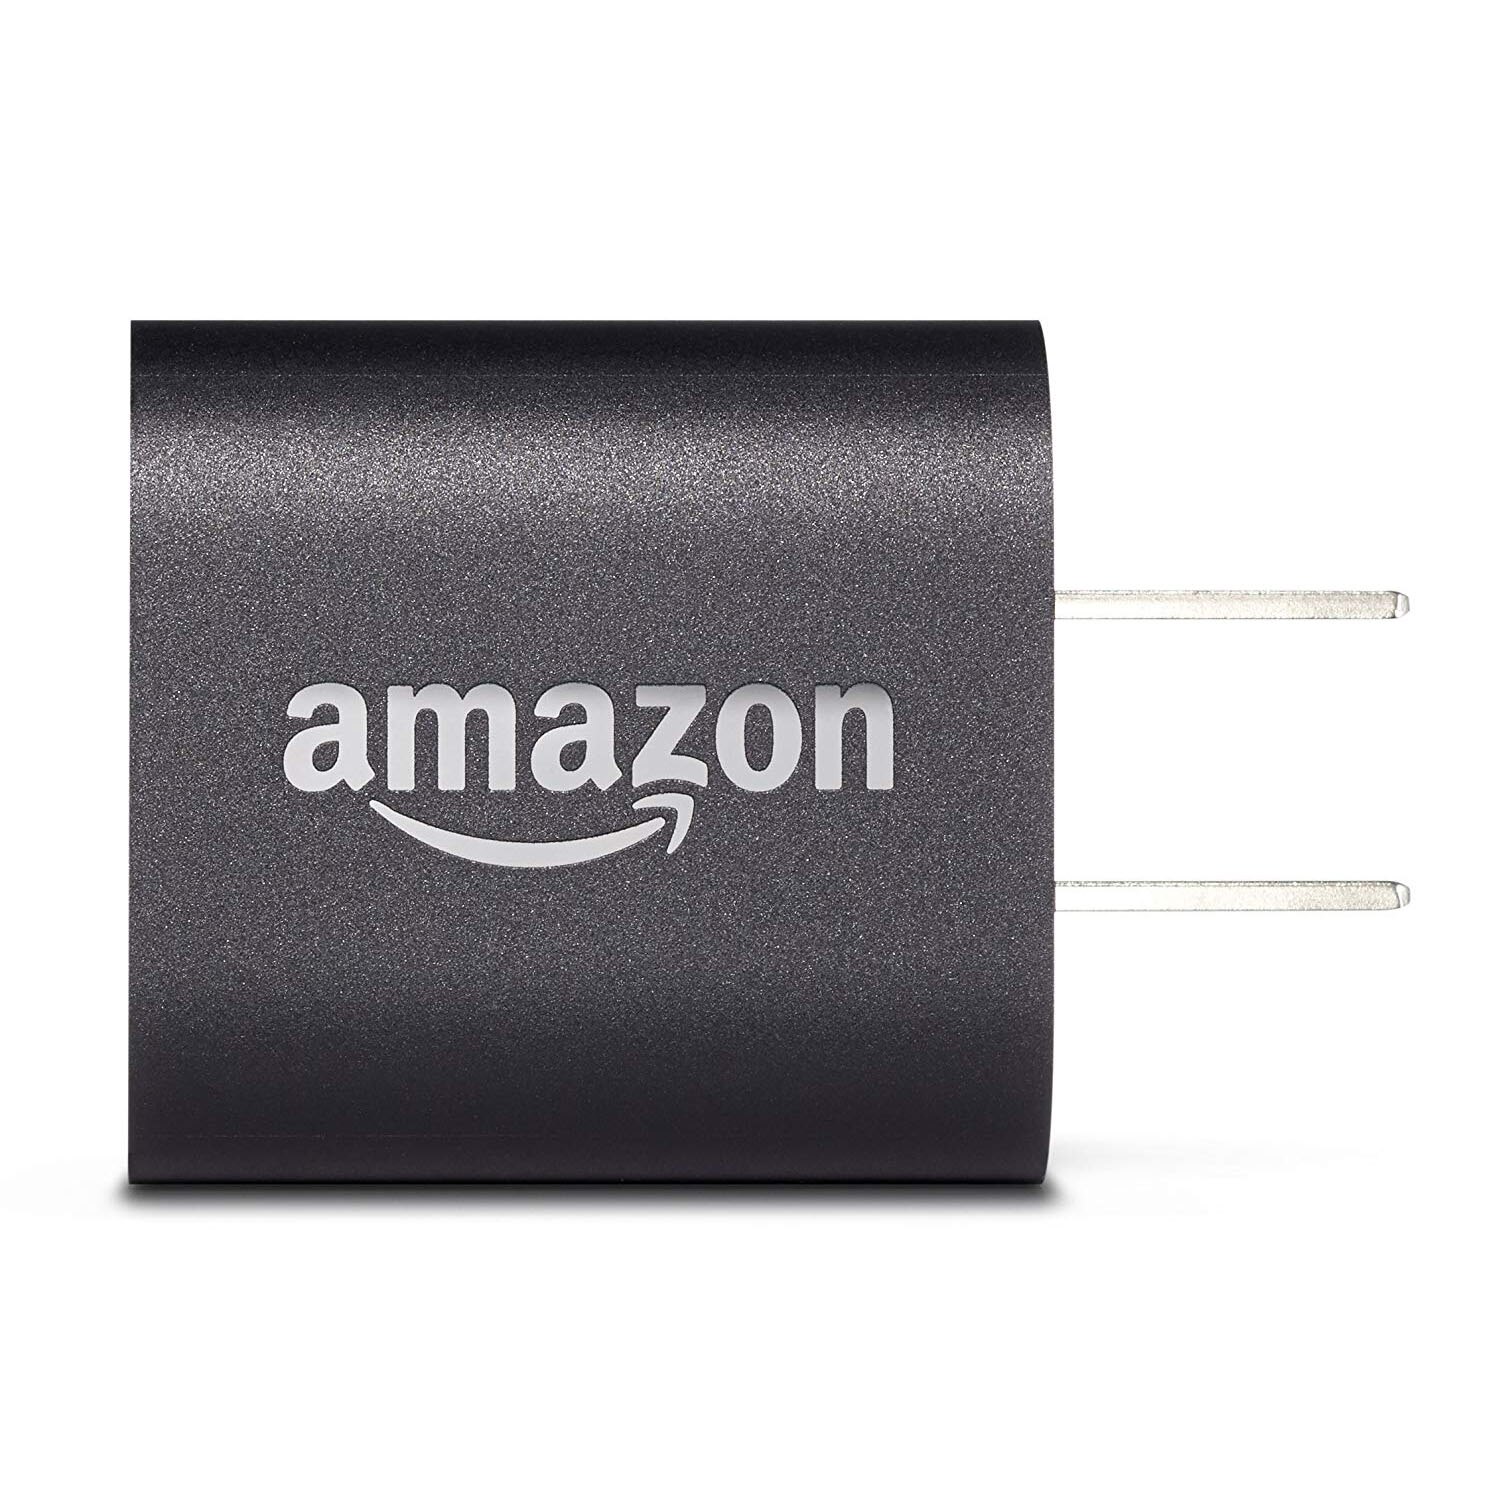 Amazon 亞馬遜 5W USB 充電器。人氣店家愛網拍的品牌、AMAZON亞馬遜有最棒的商品。快到日本NO.1的Rakuten樂天市場的安全環境中盡情網路購物，使用樂天信用卡選購優惠更划算！